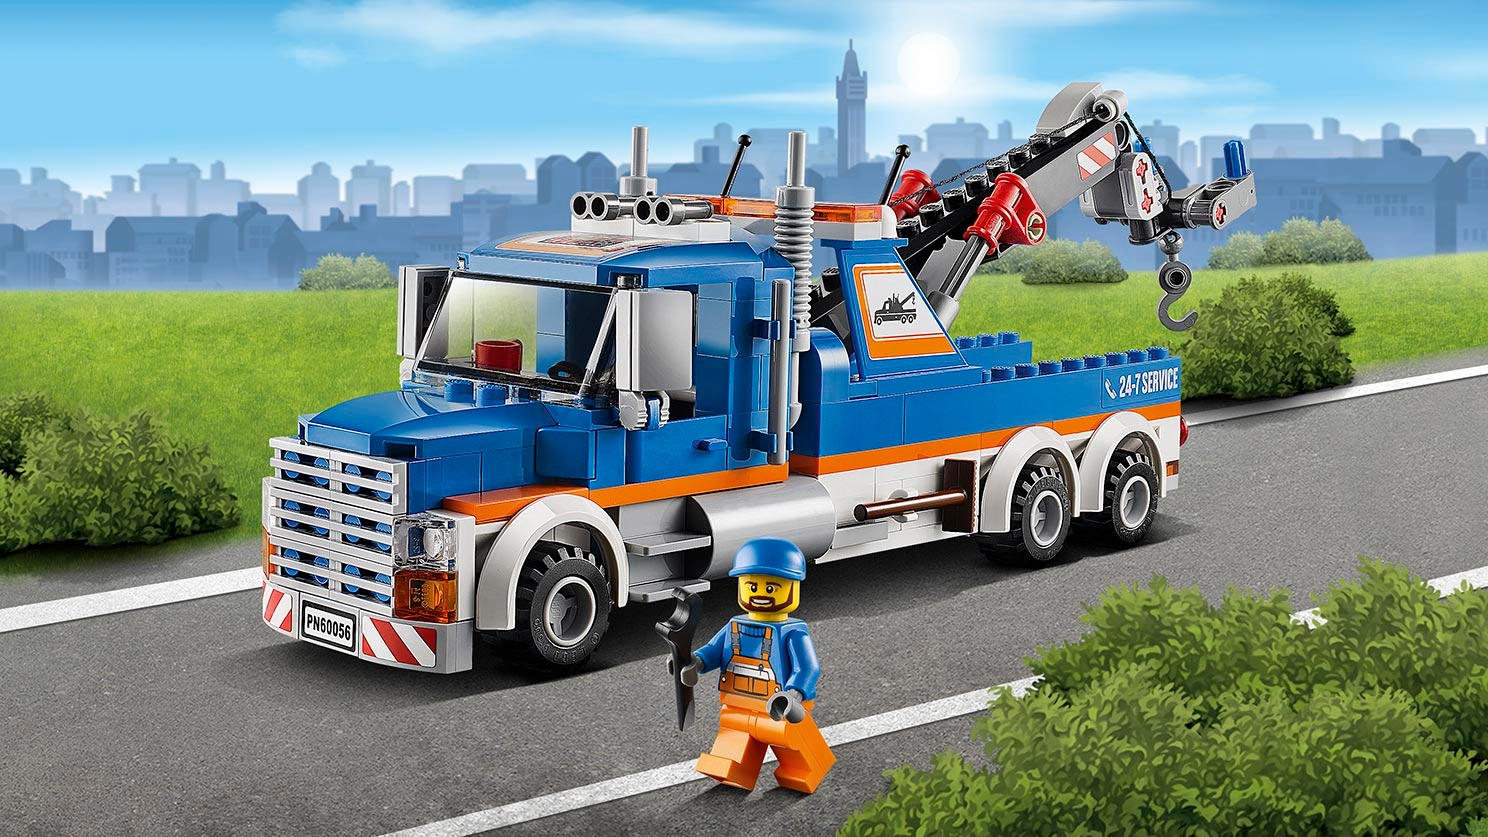 Tow Truck 60056 - LEGO® City Sets - LEGO.com for kids